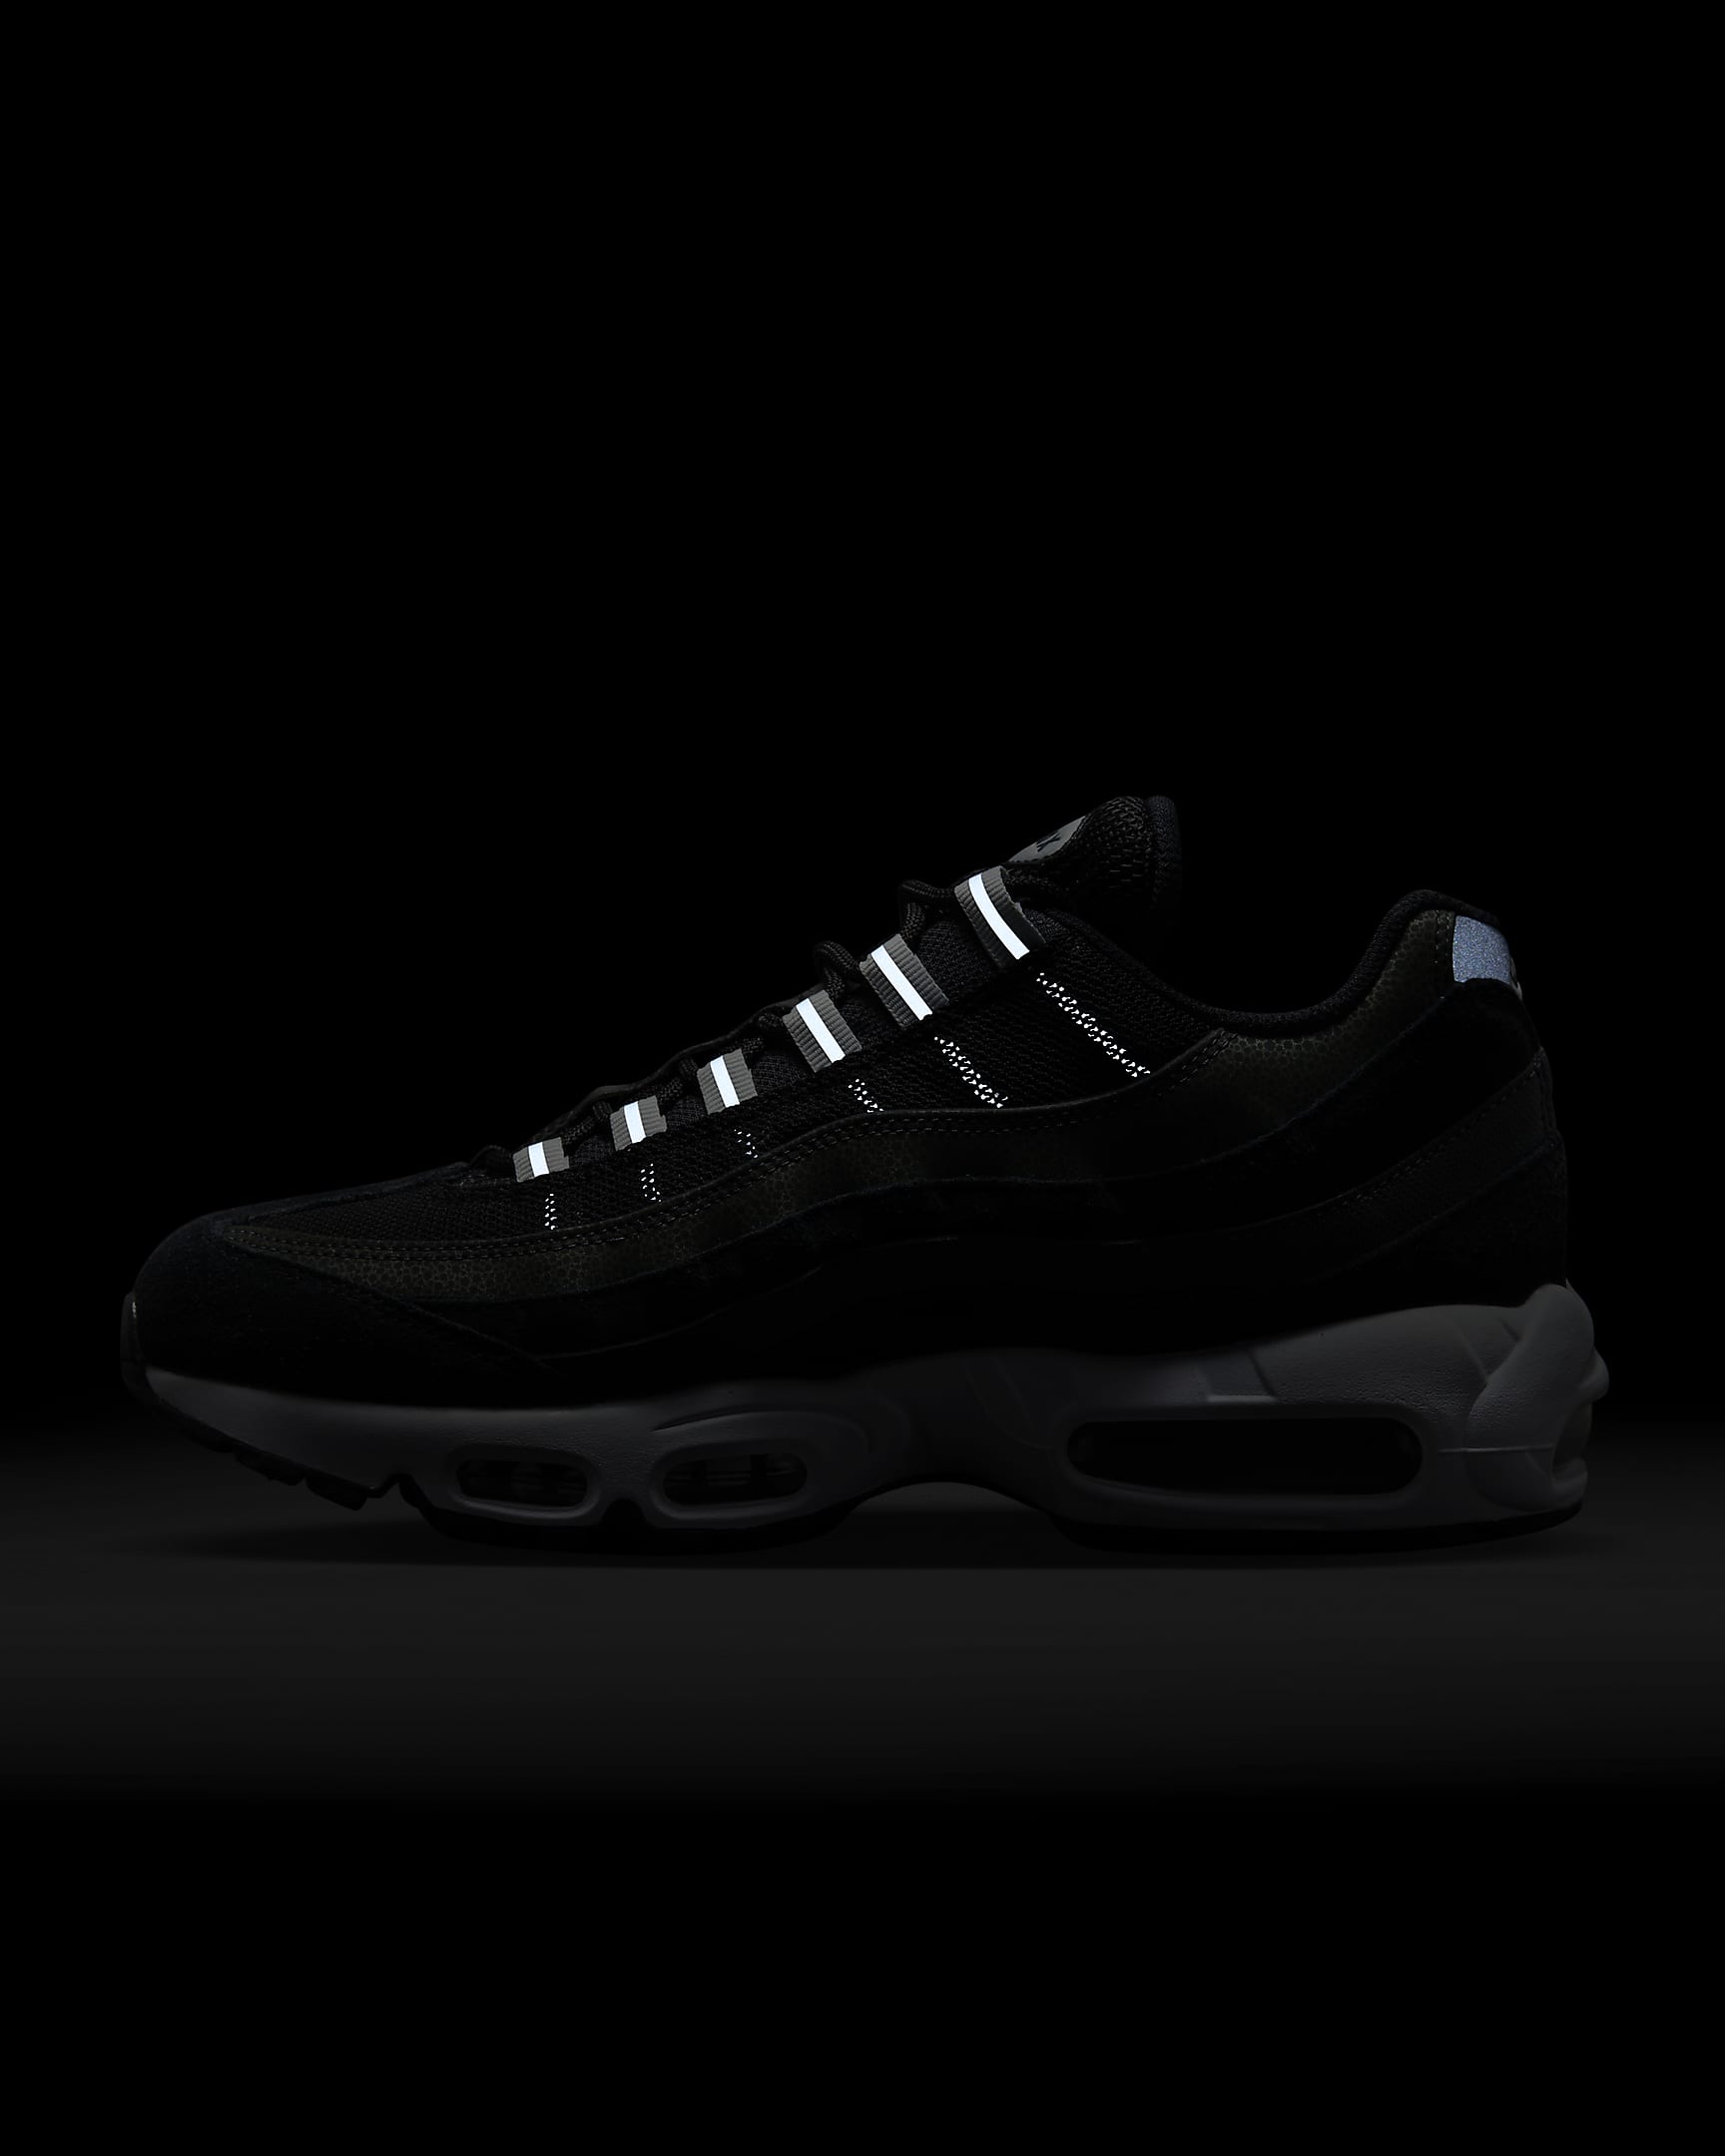 Nike Air Max 95 Men's Shoes - Black/Anthracite/White/Pure Platinum